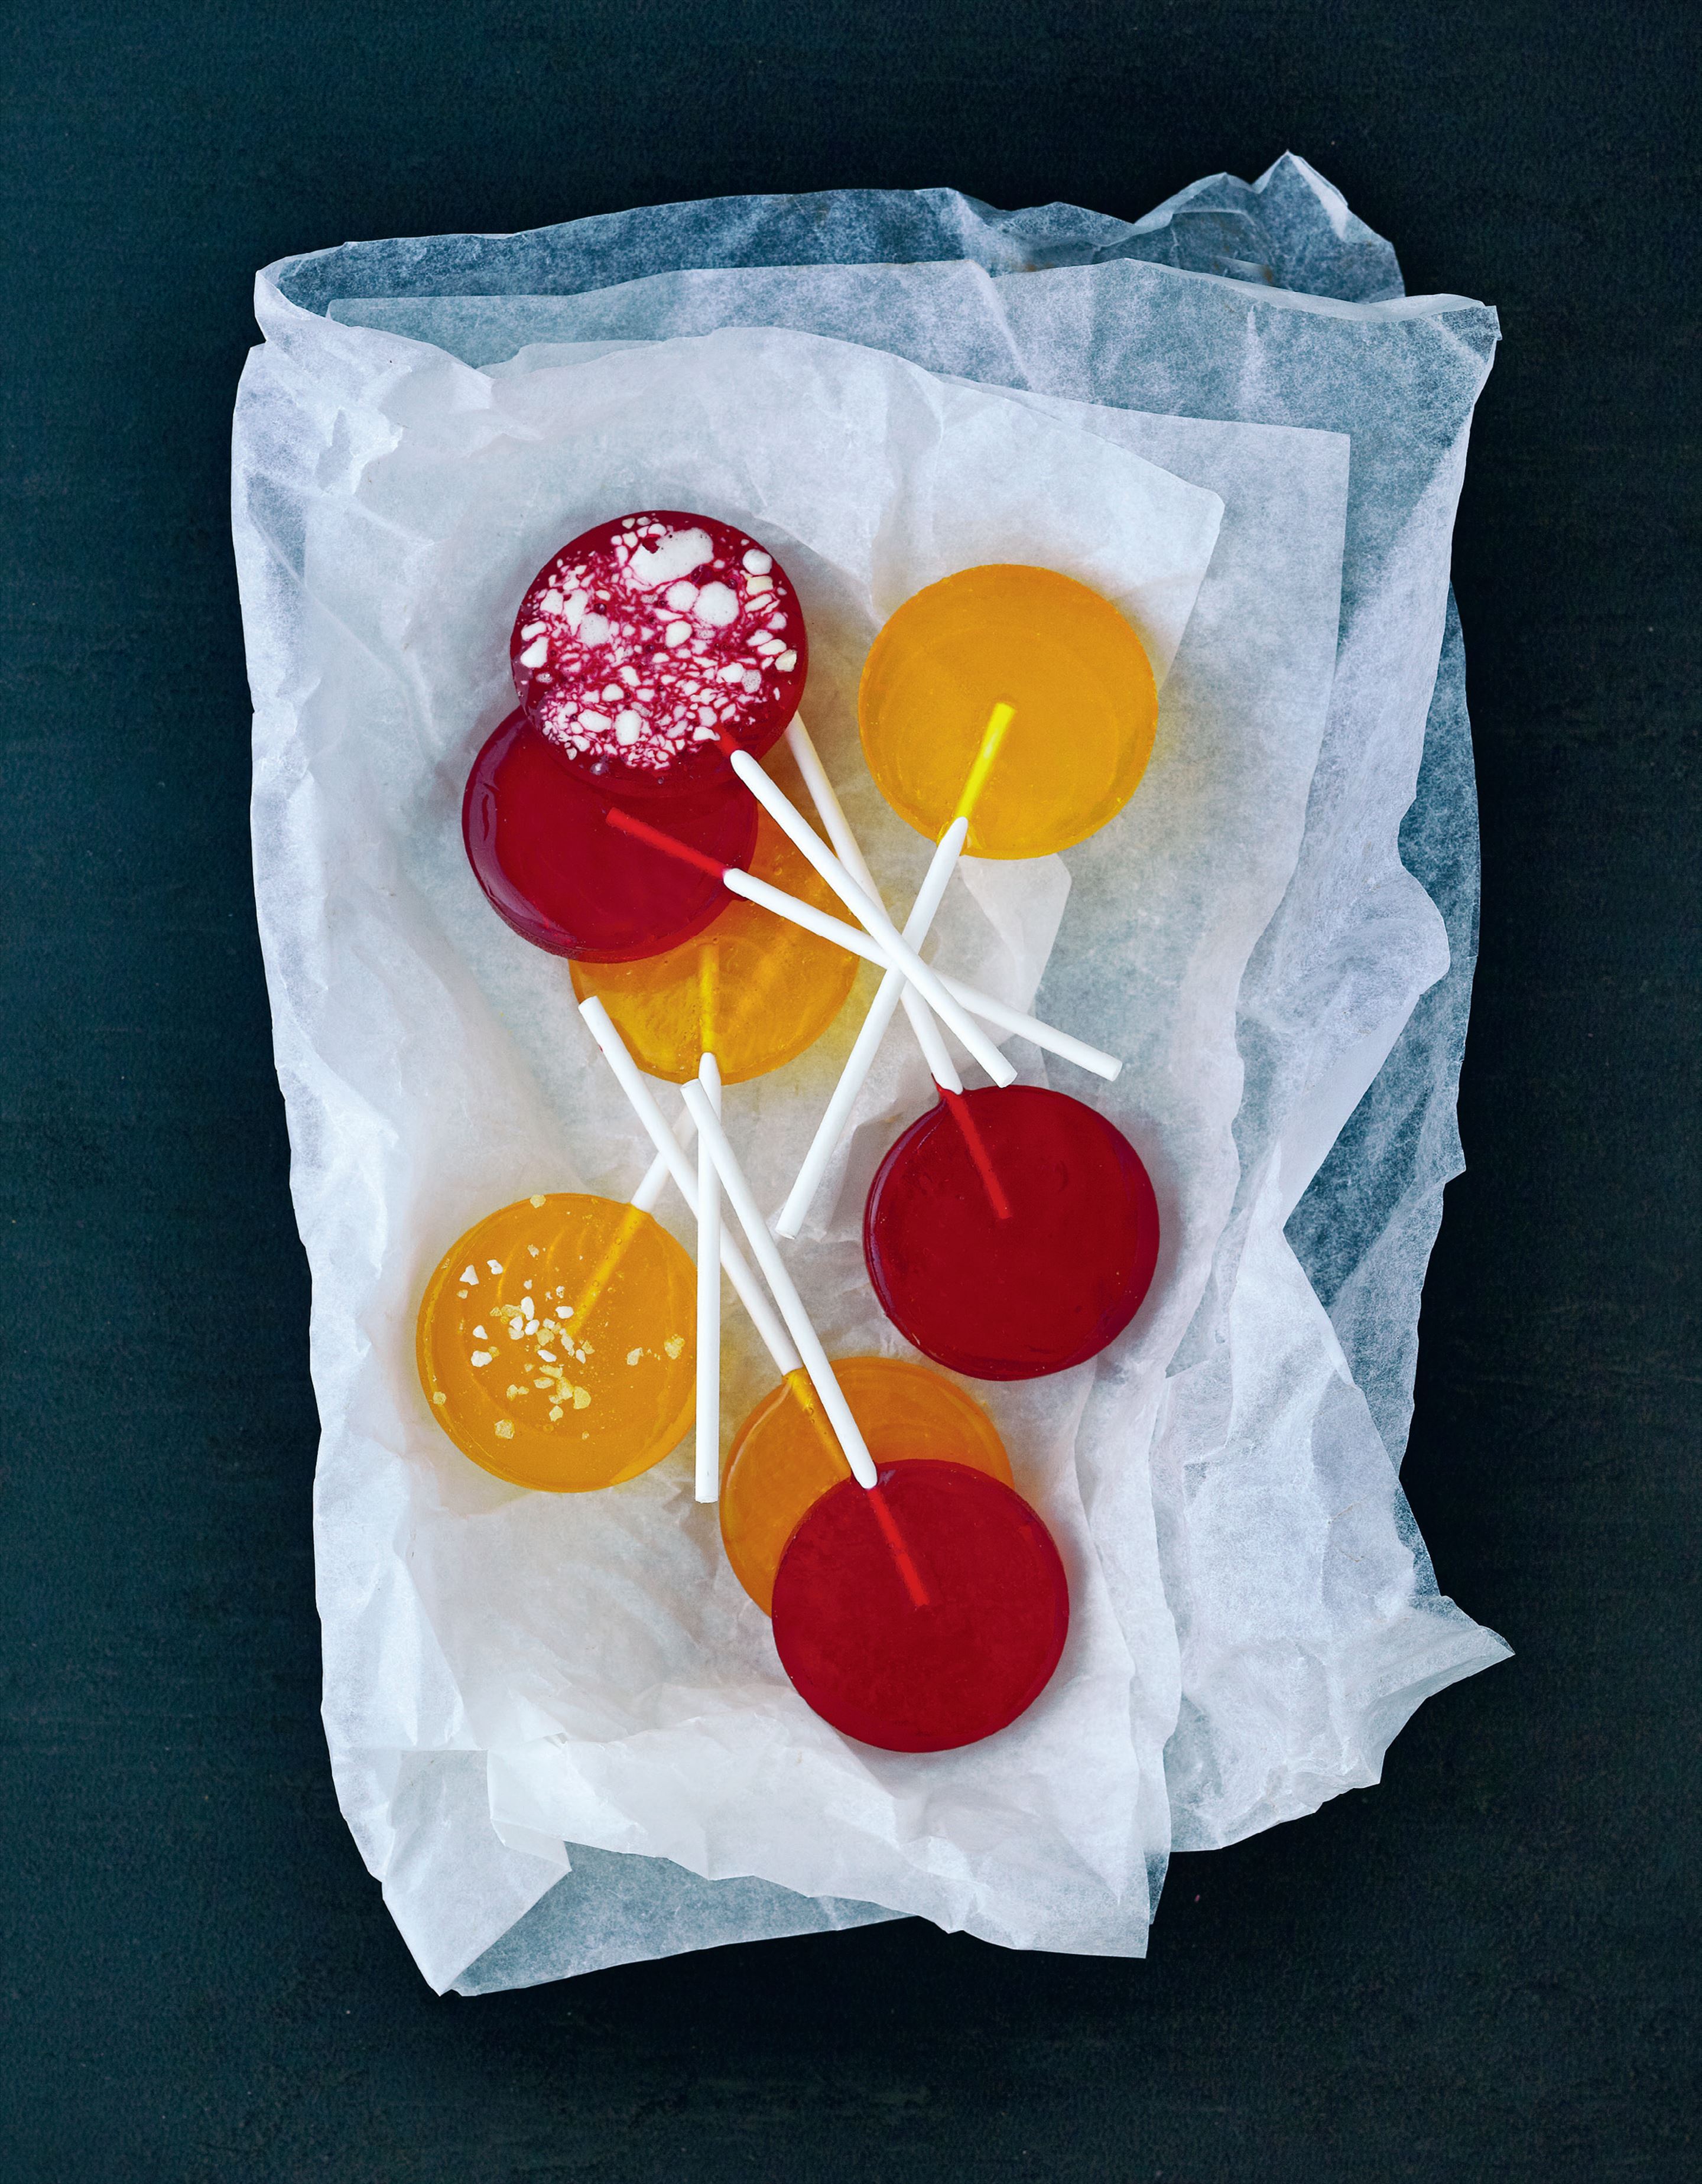 Candy lollipops